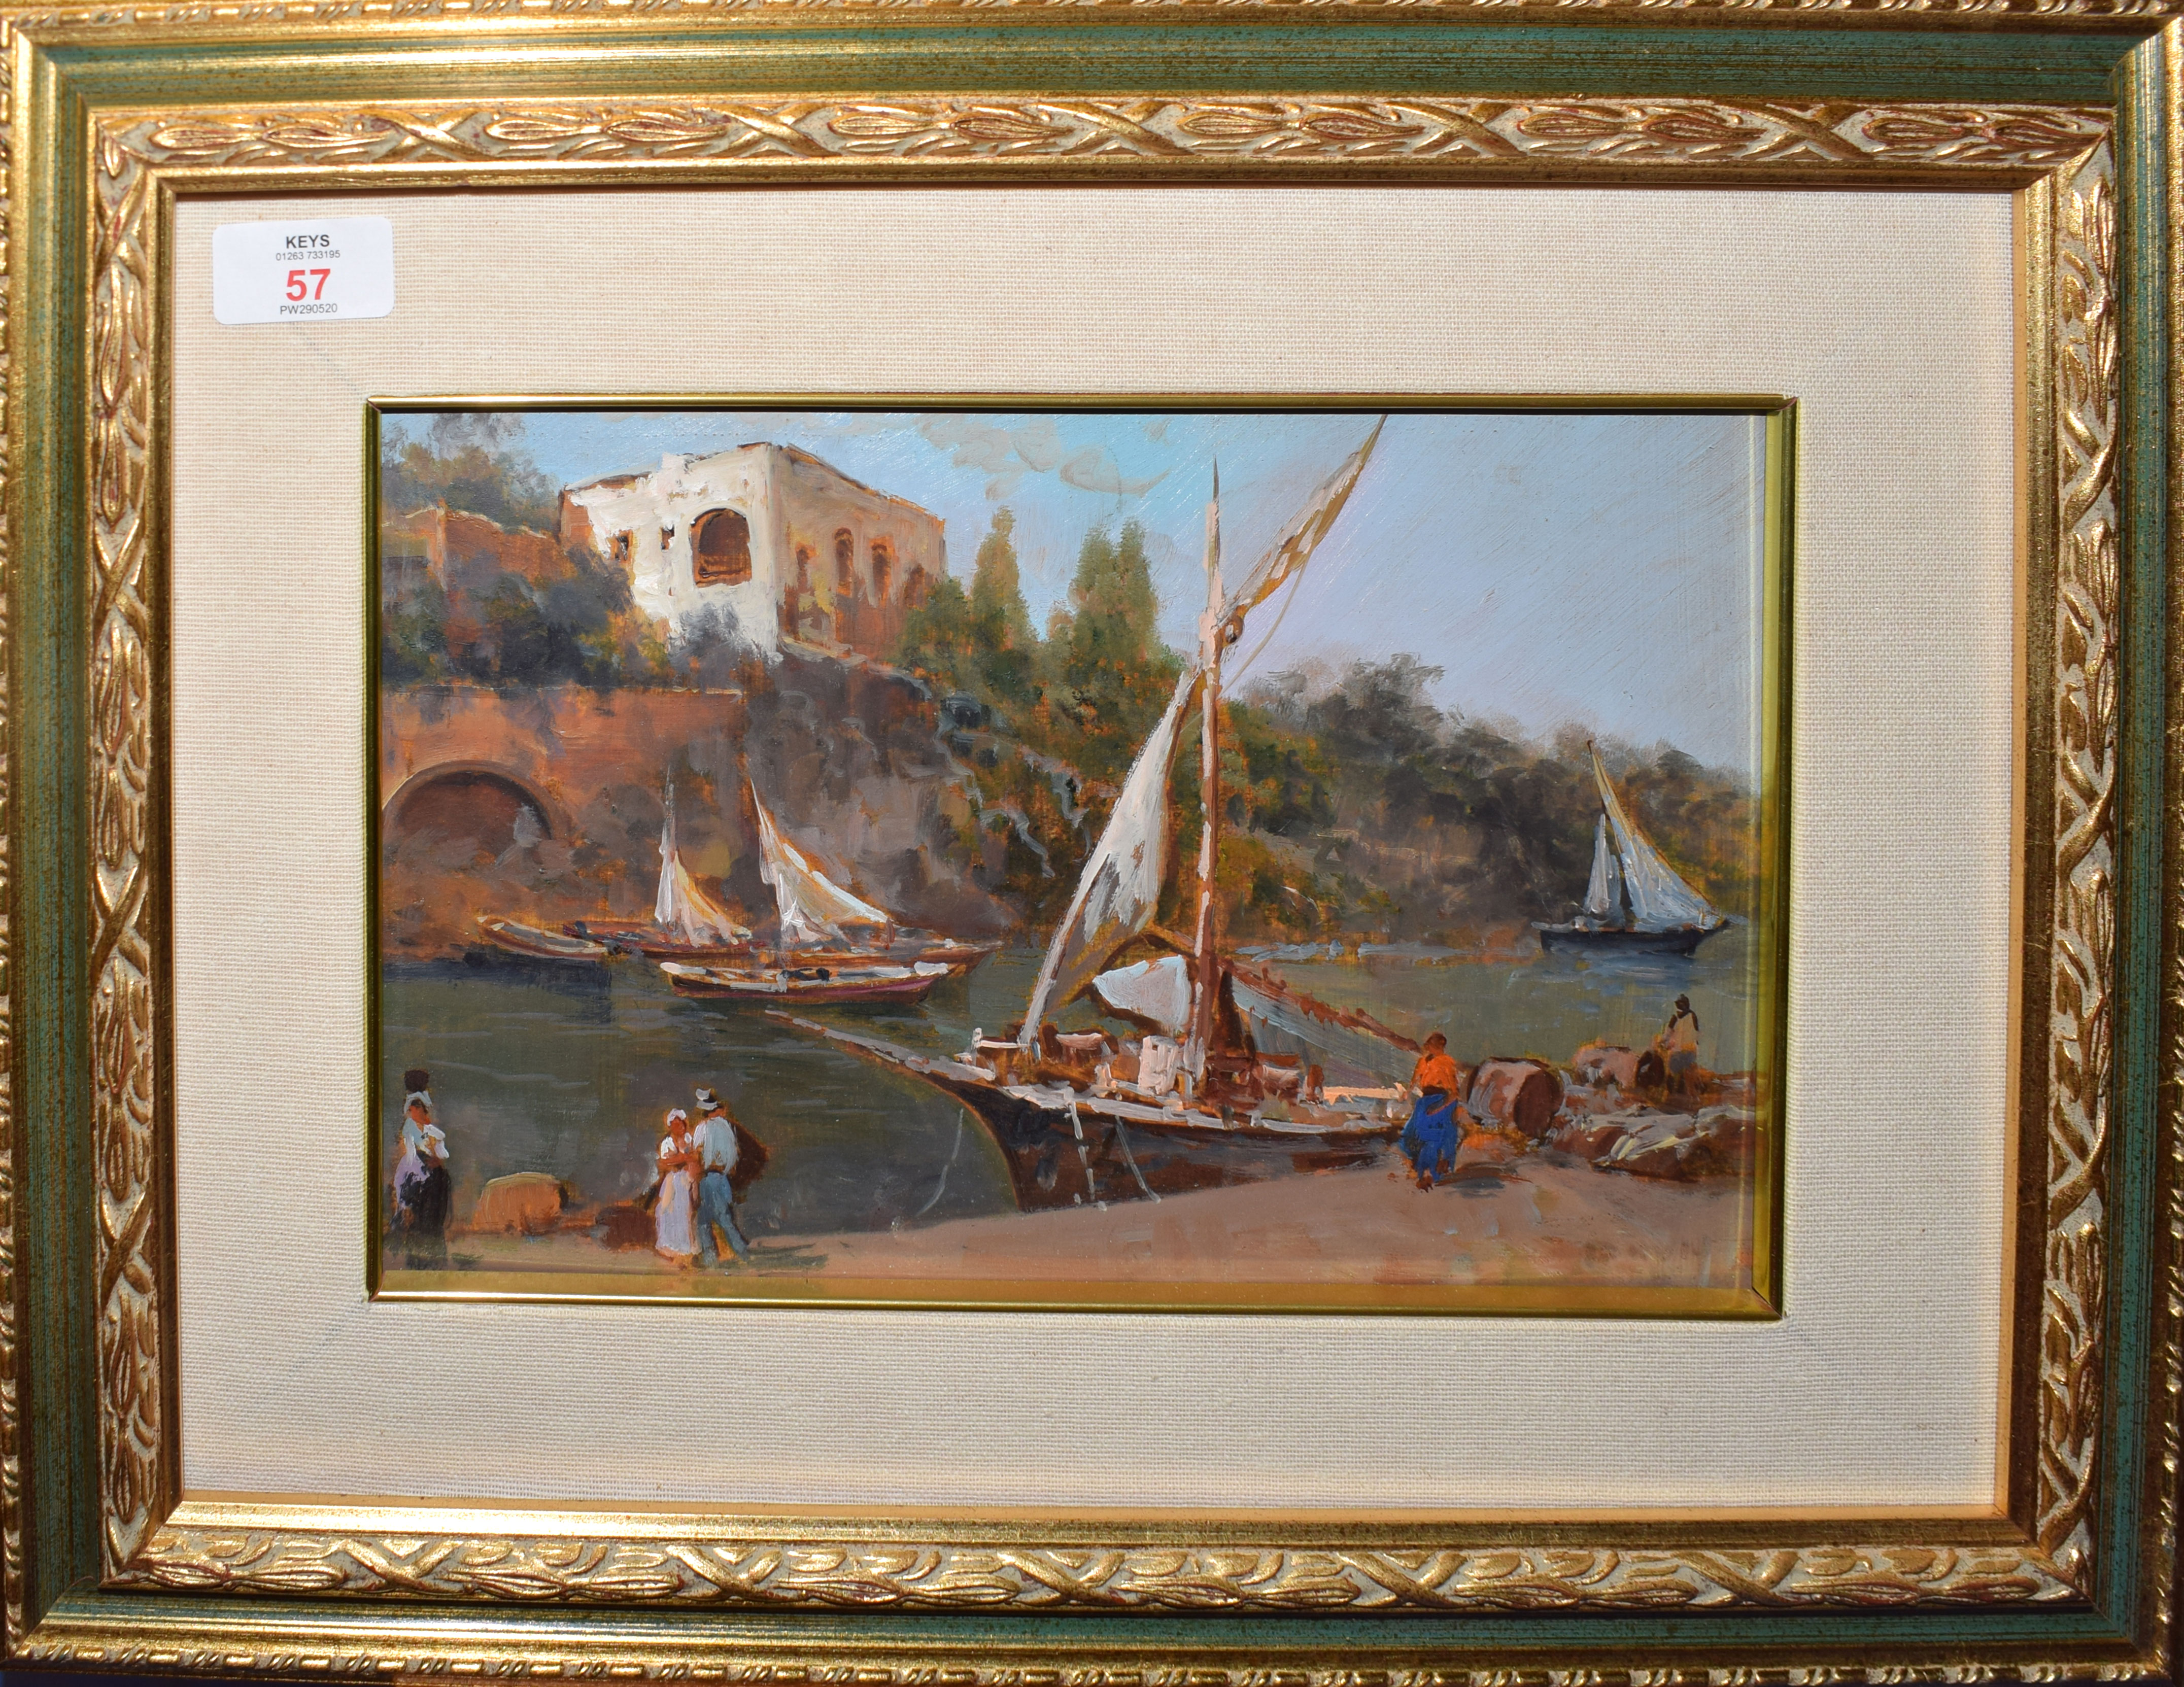 David (20th Century), Italian Landscape, oil on panel, signed lower right, 17 x 27cm